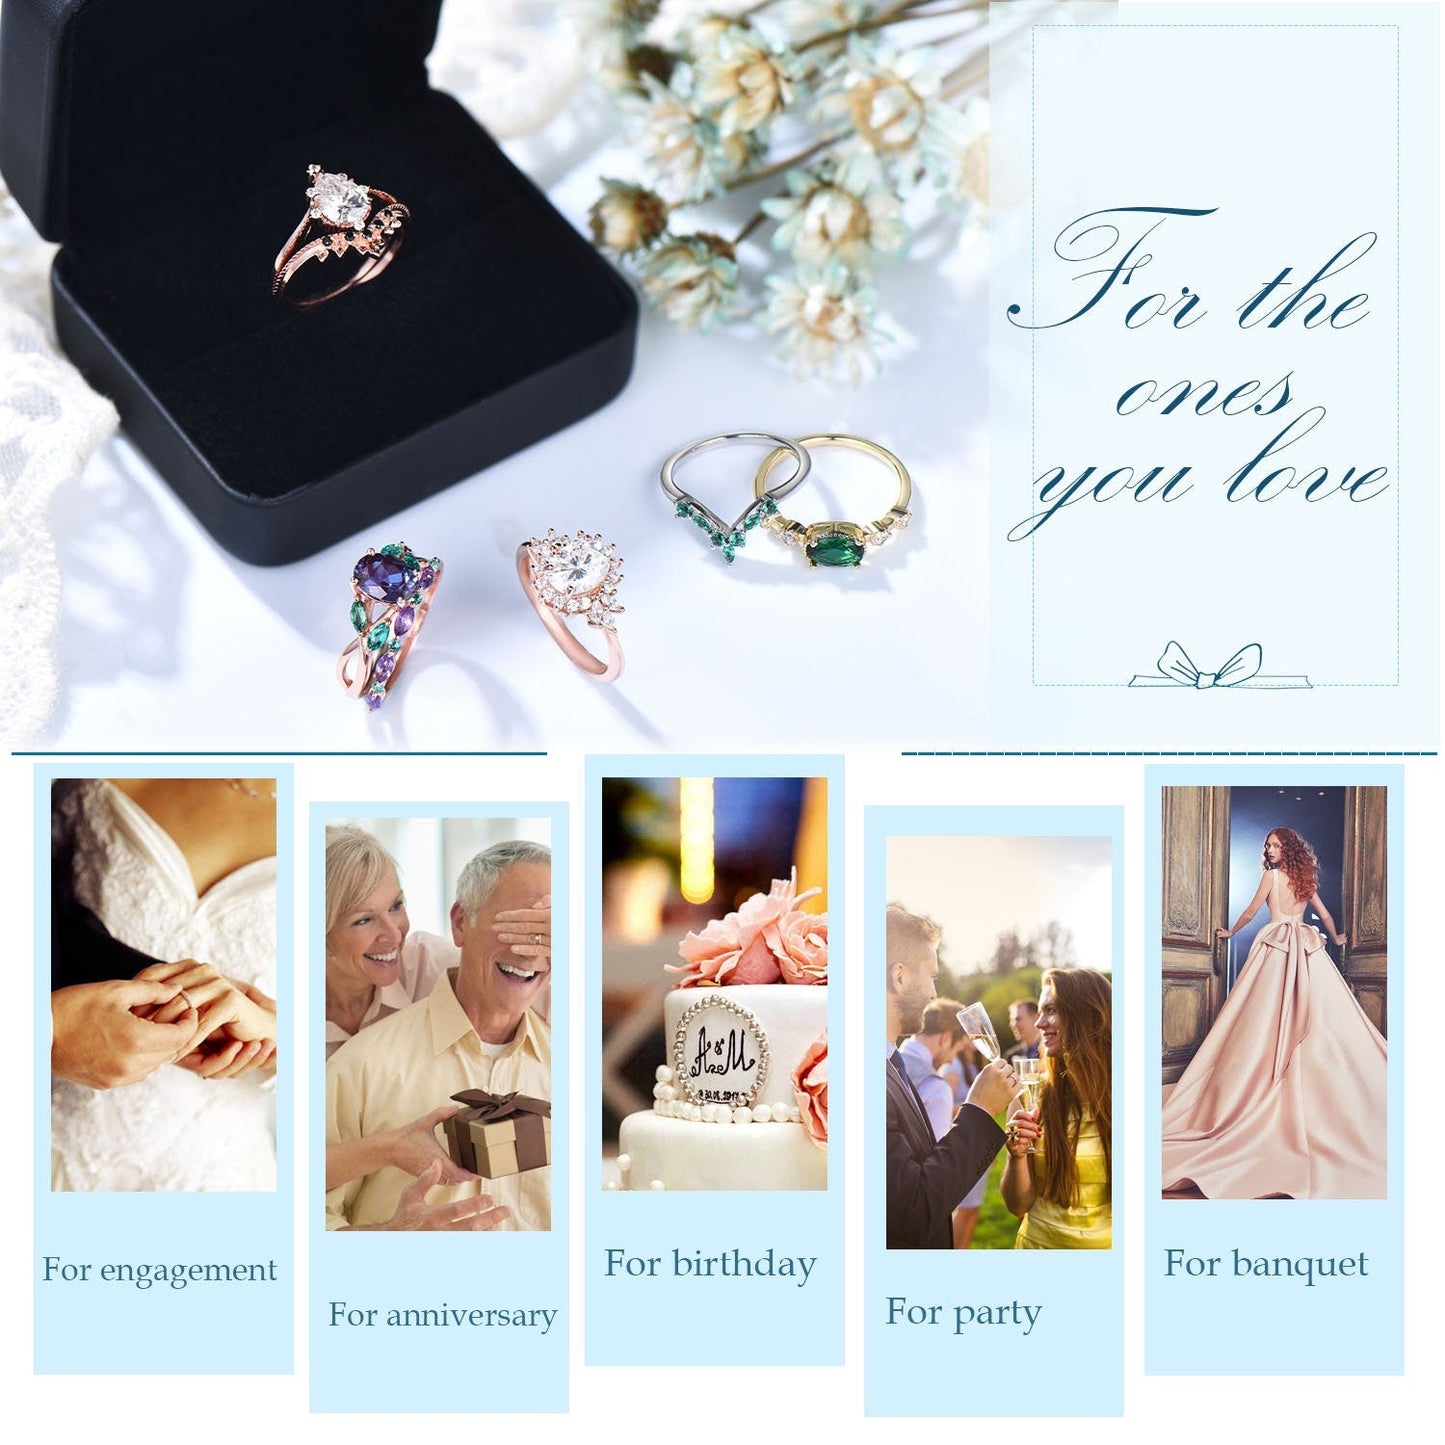 1.25CTW Pear Diamond Engagement Ring Set Nature Inspired Lab Grown Diamond Wedding Ring 18K Rose Gold Diamond Bridal Ring with IGI Certificate